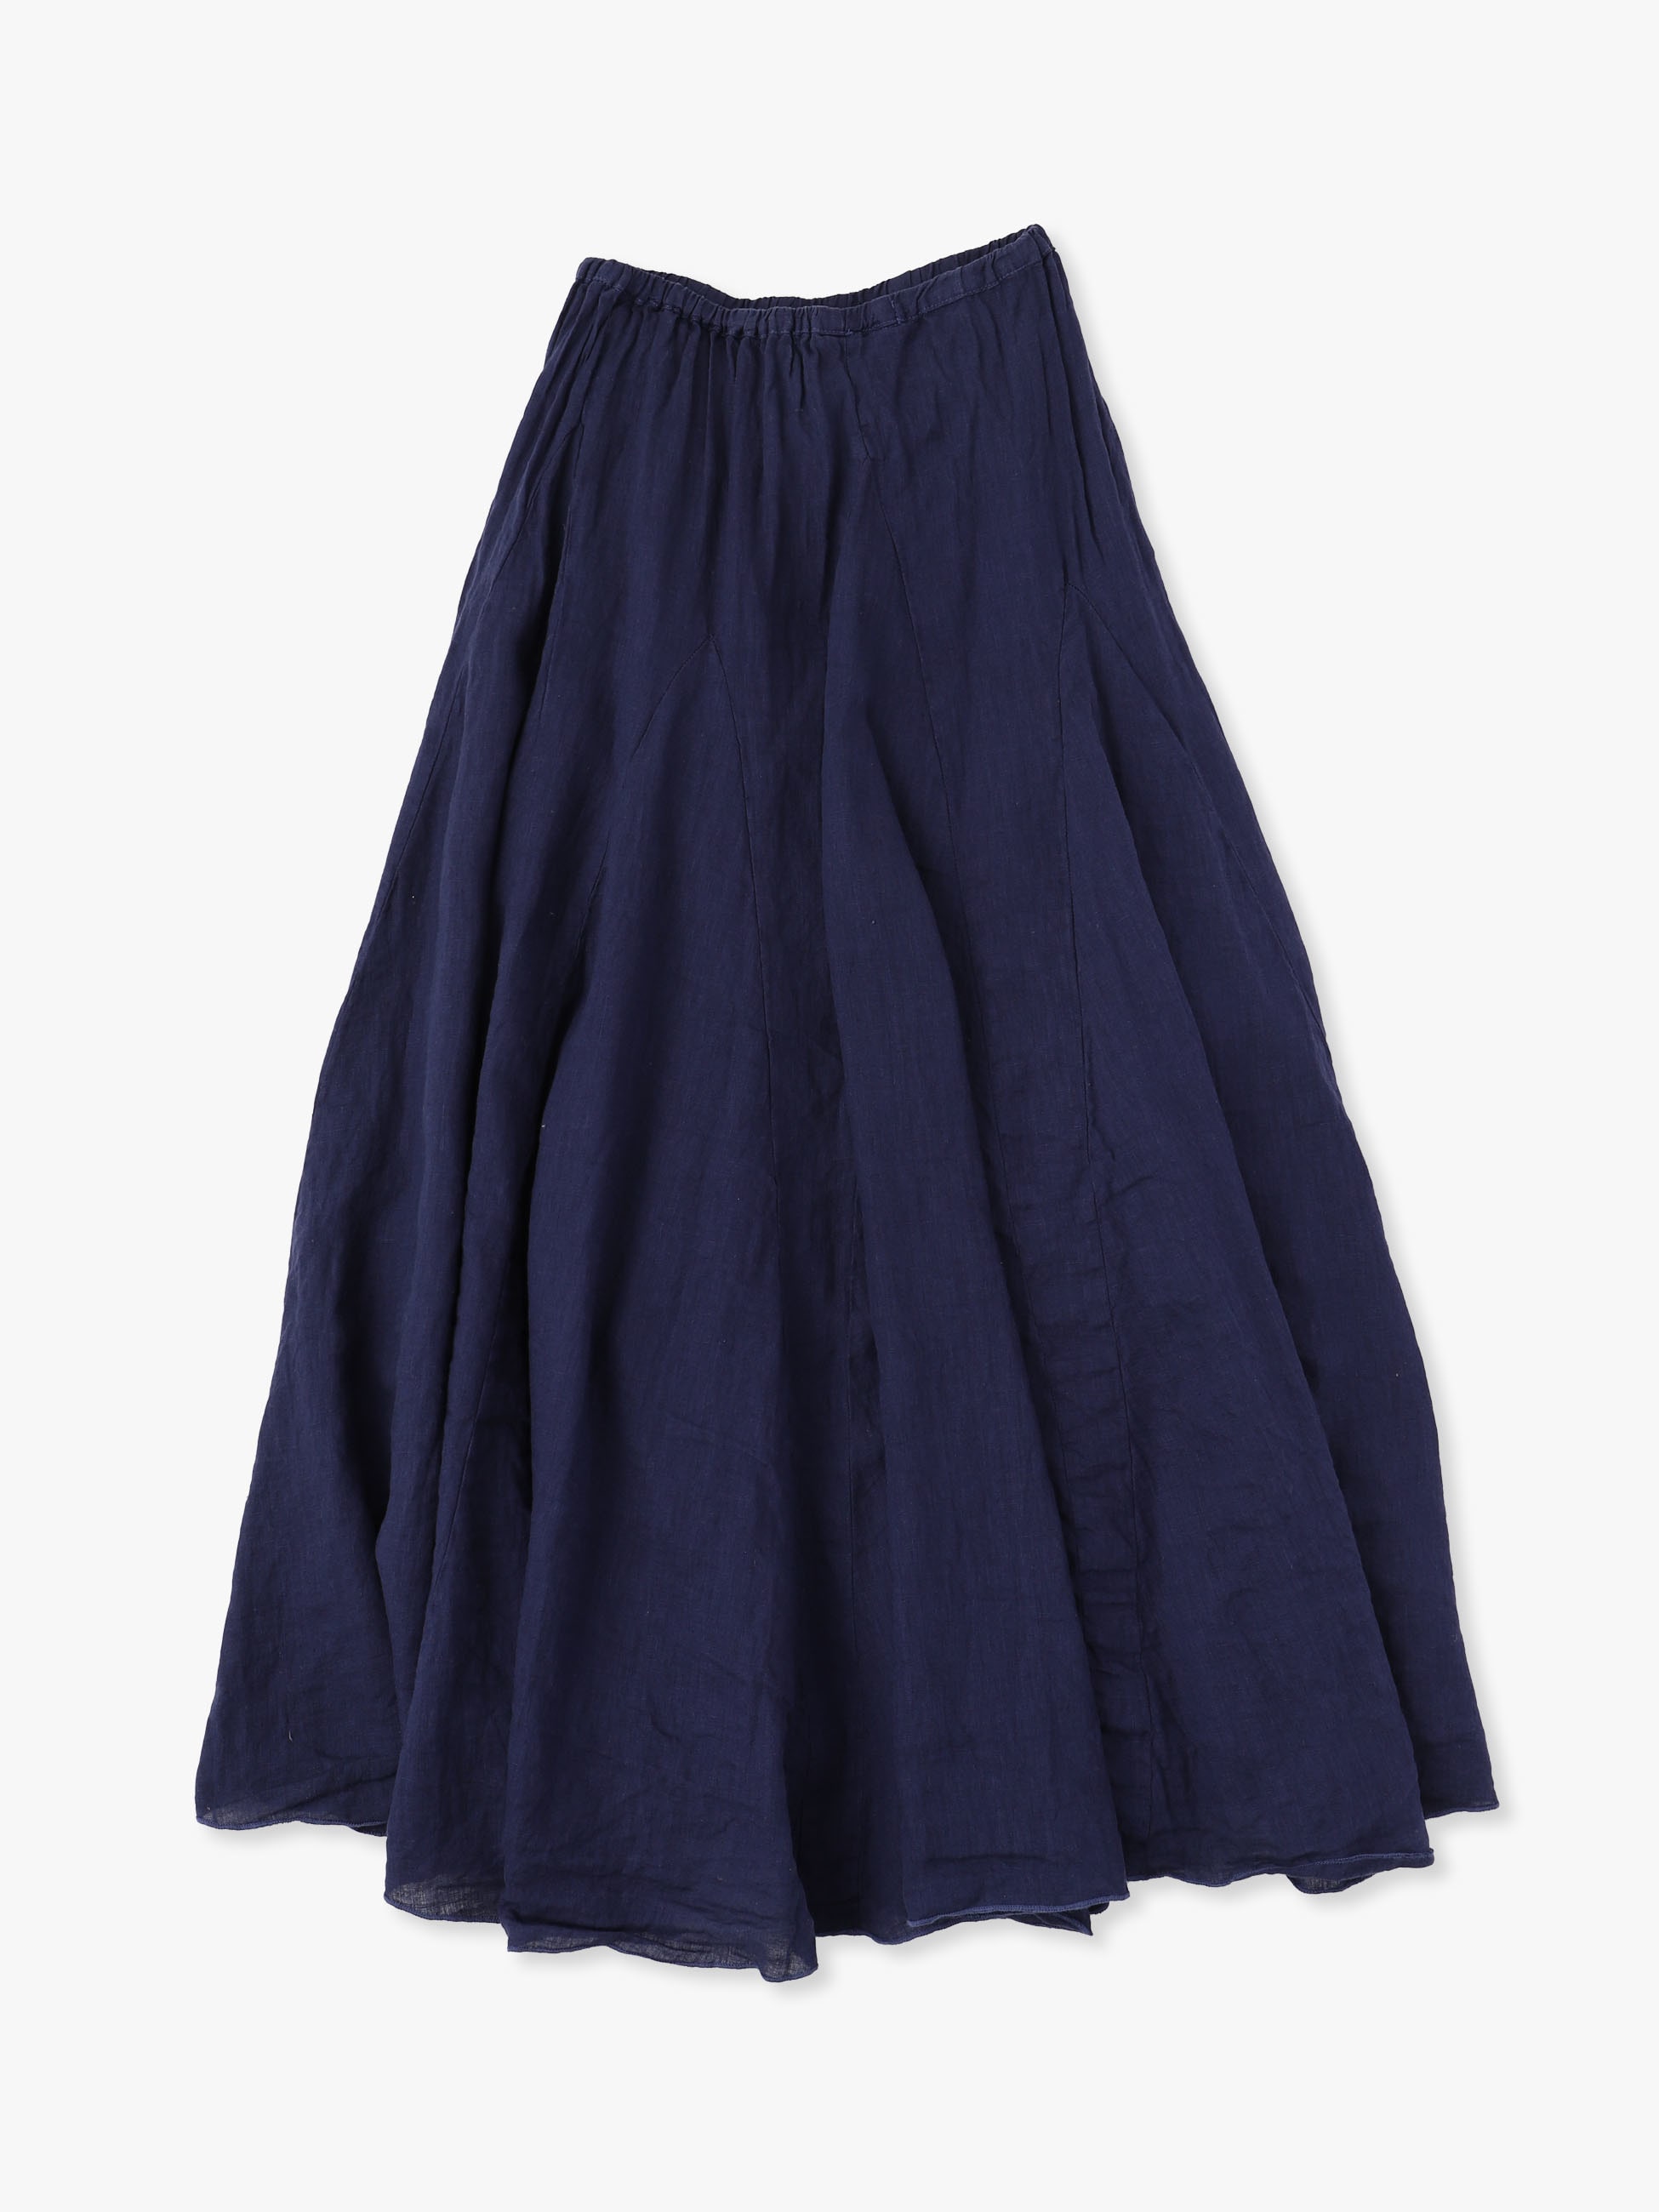 Lily Linen Skirt (Navy)